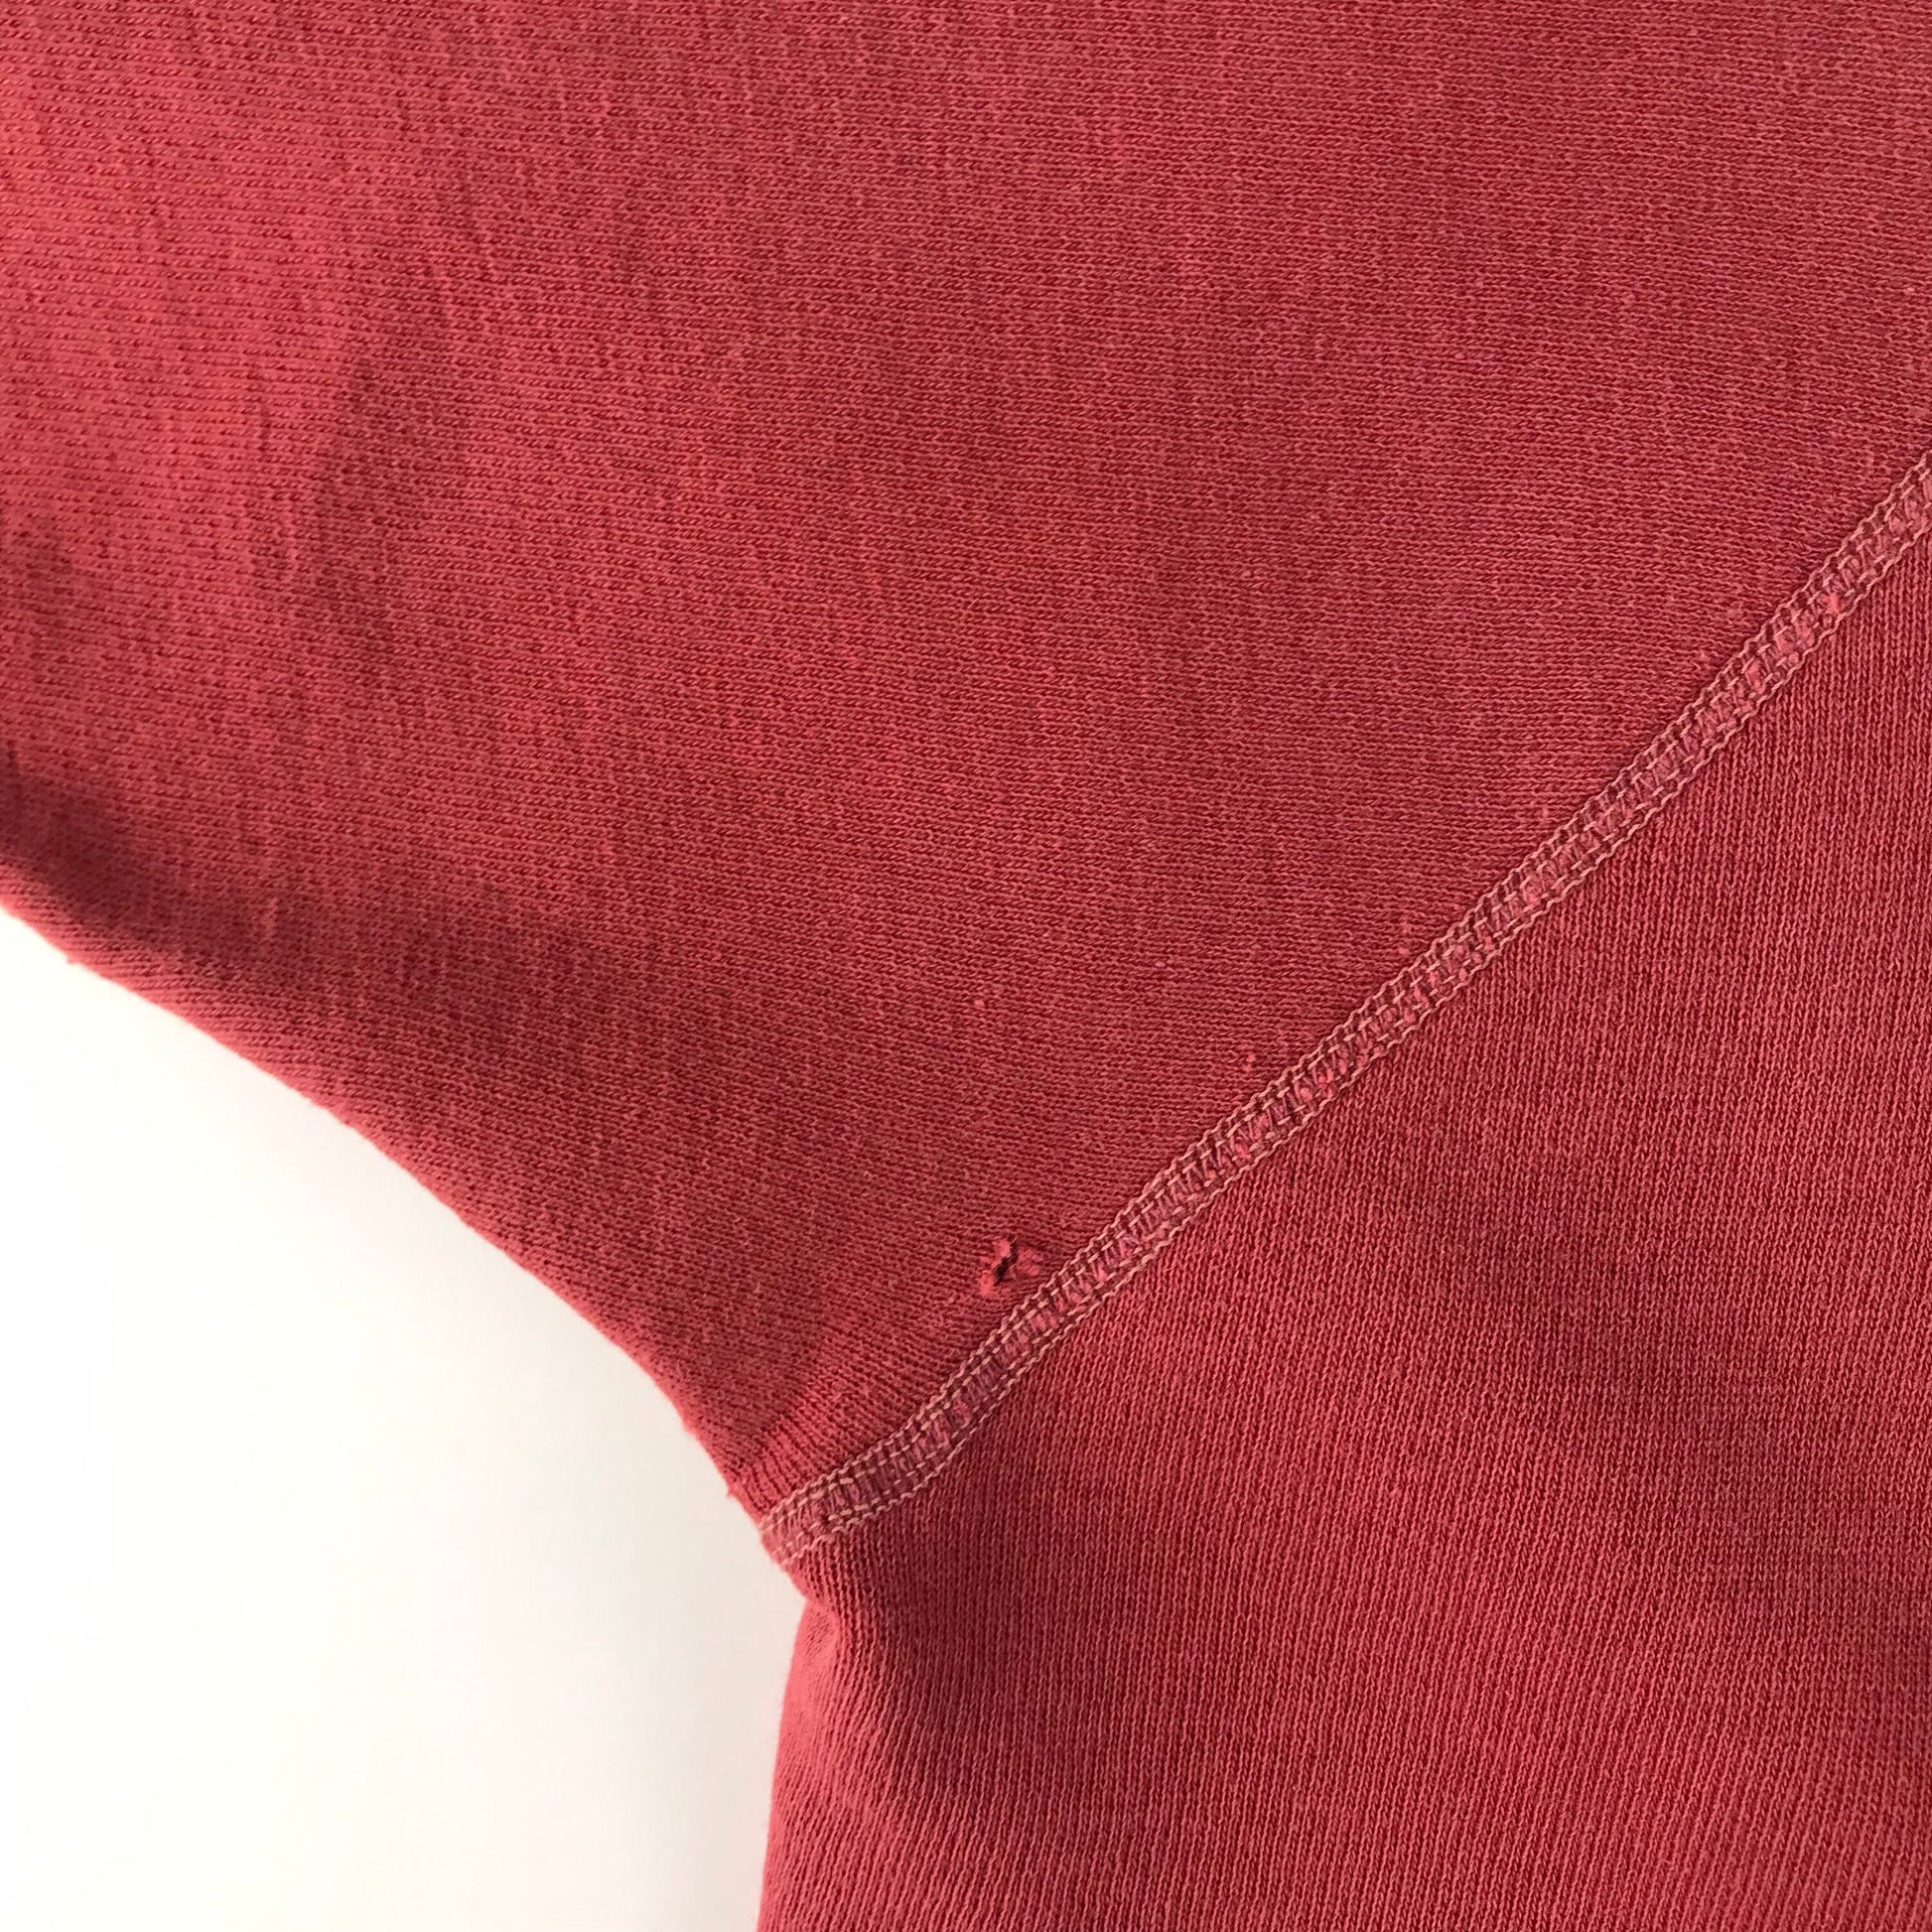 1960s Ohio State University  Raglan Cut Short Sleeve Sweatshirt Size M/L